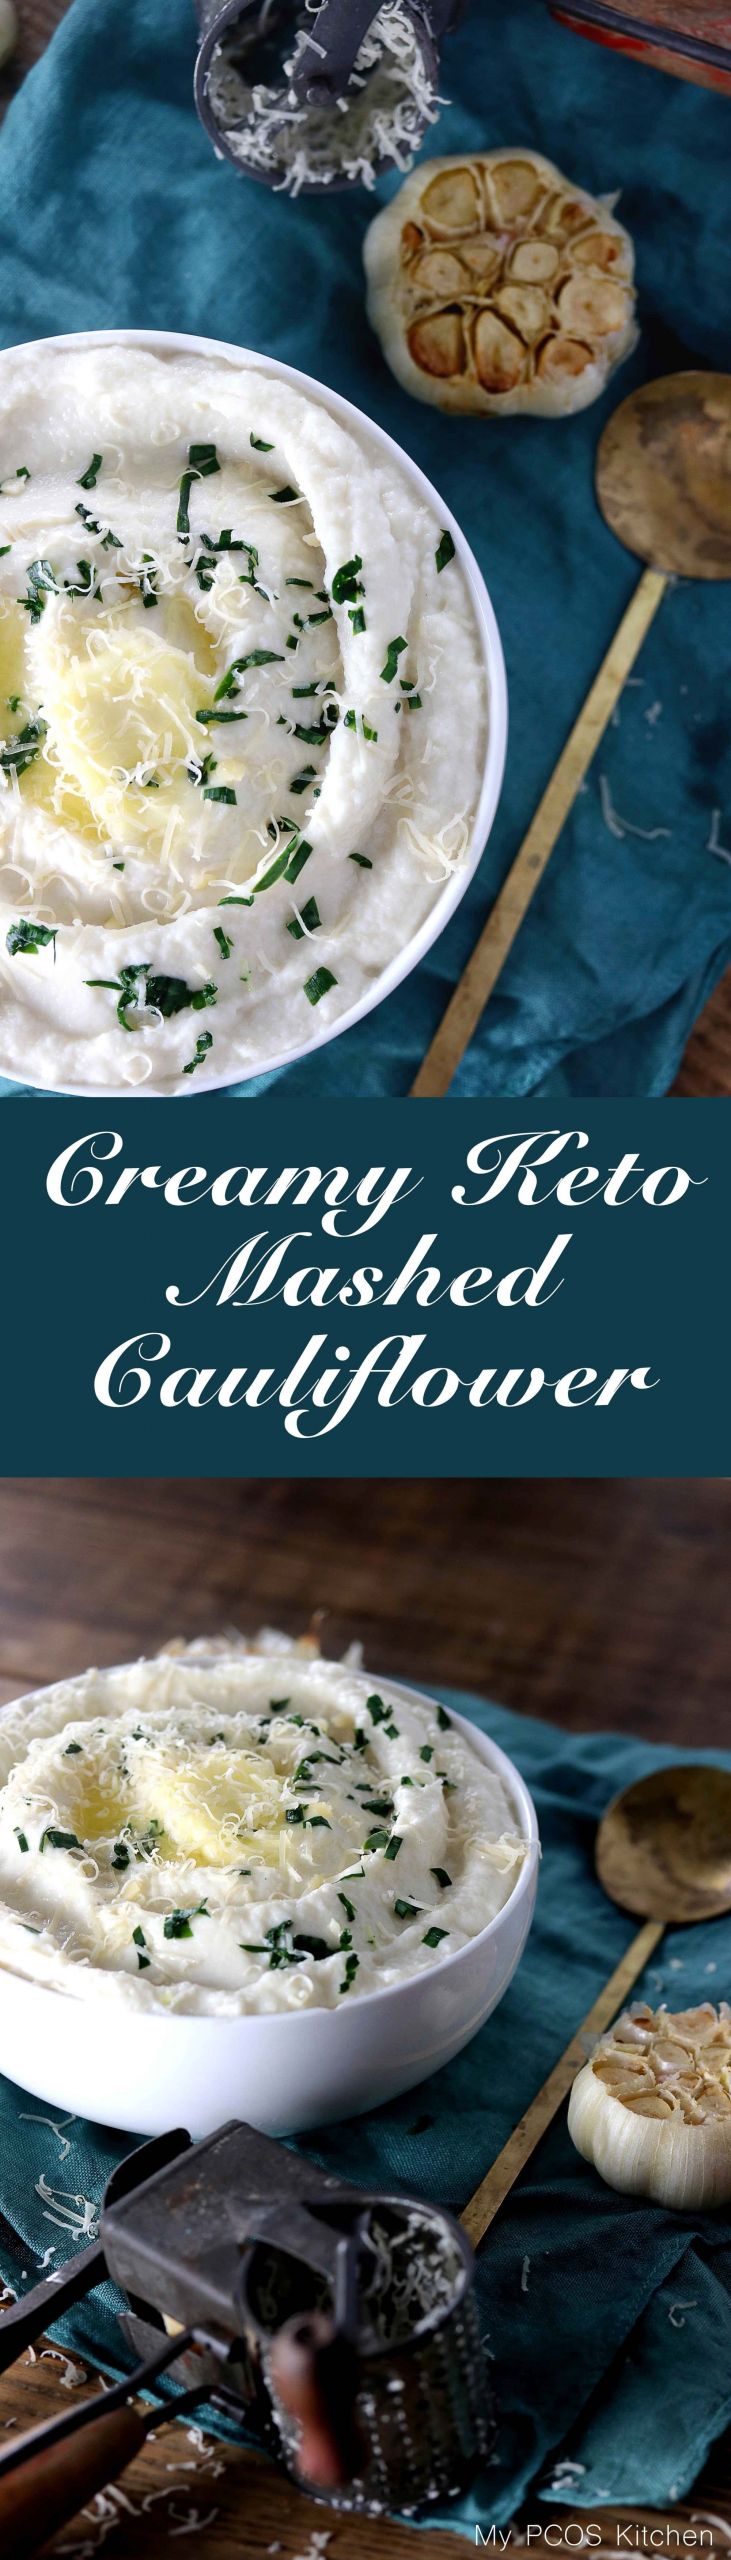 Creamy Mashed Cauliflower Keto
 Creamy Keto Mashed Cauliflower My PCOS Kitchen